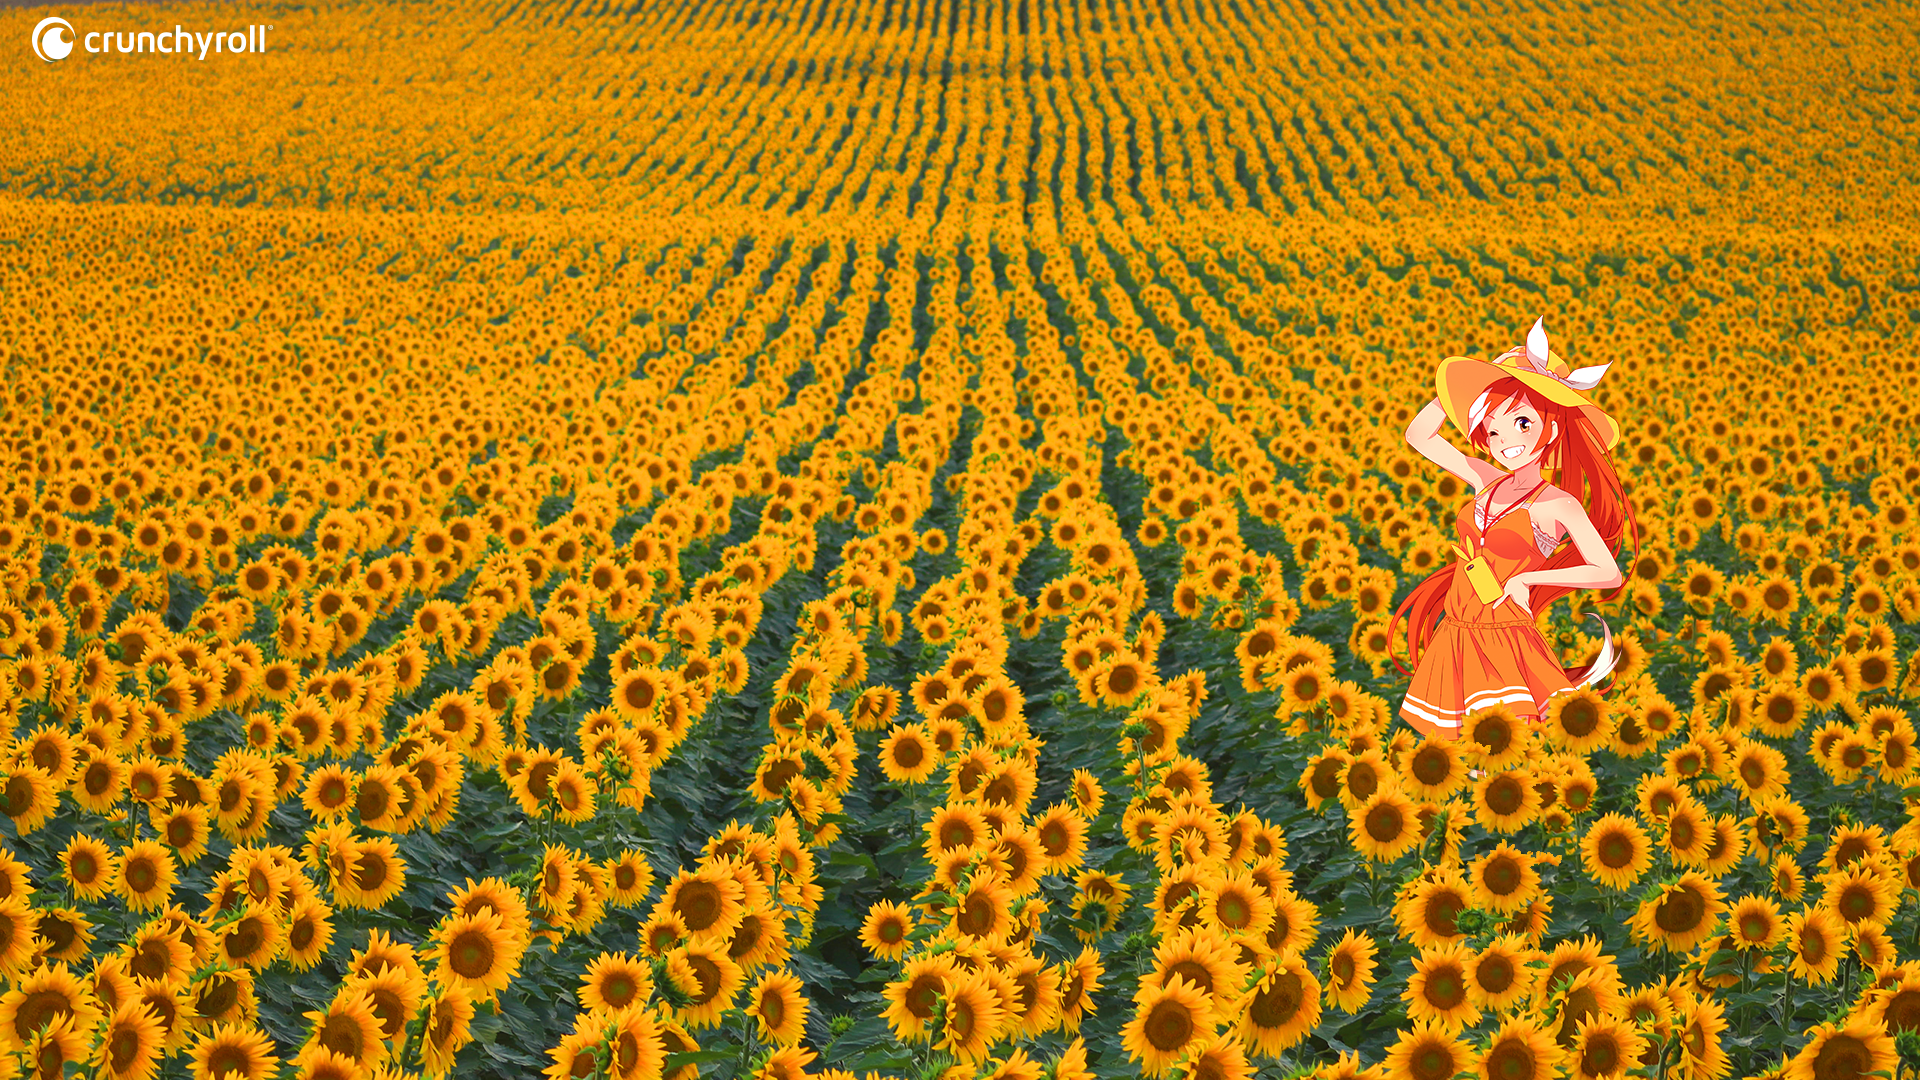 Crunchyroll Crunchyroll Hime Sunflowers 1920x1080